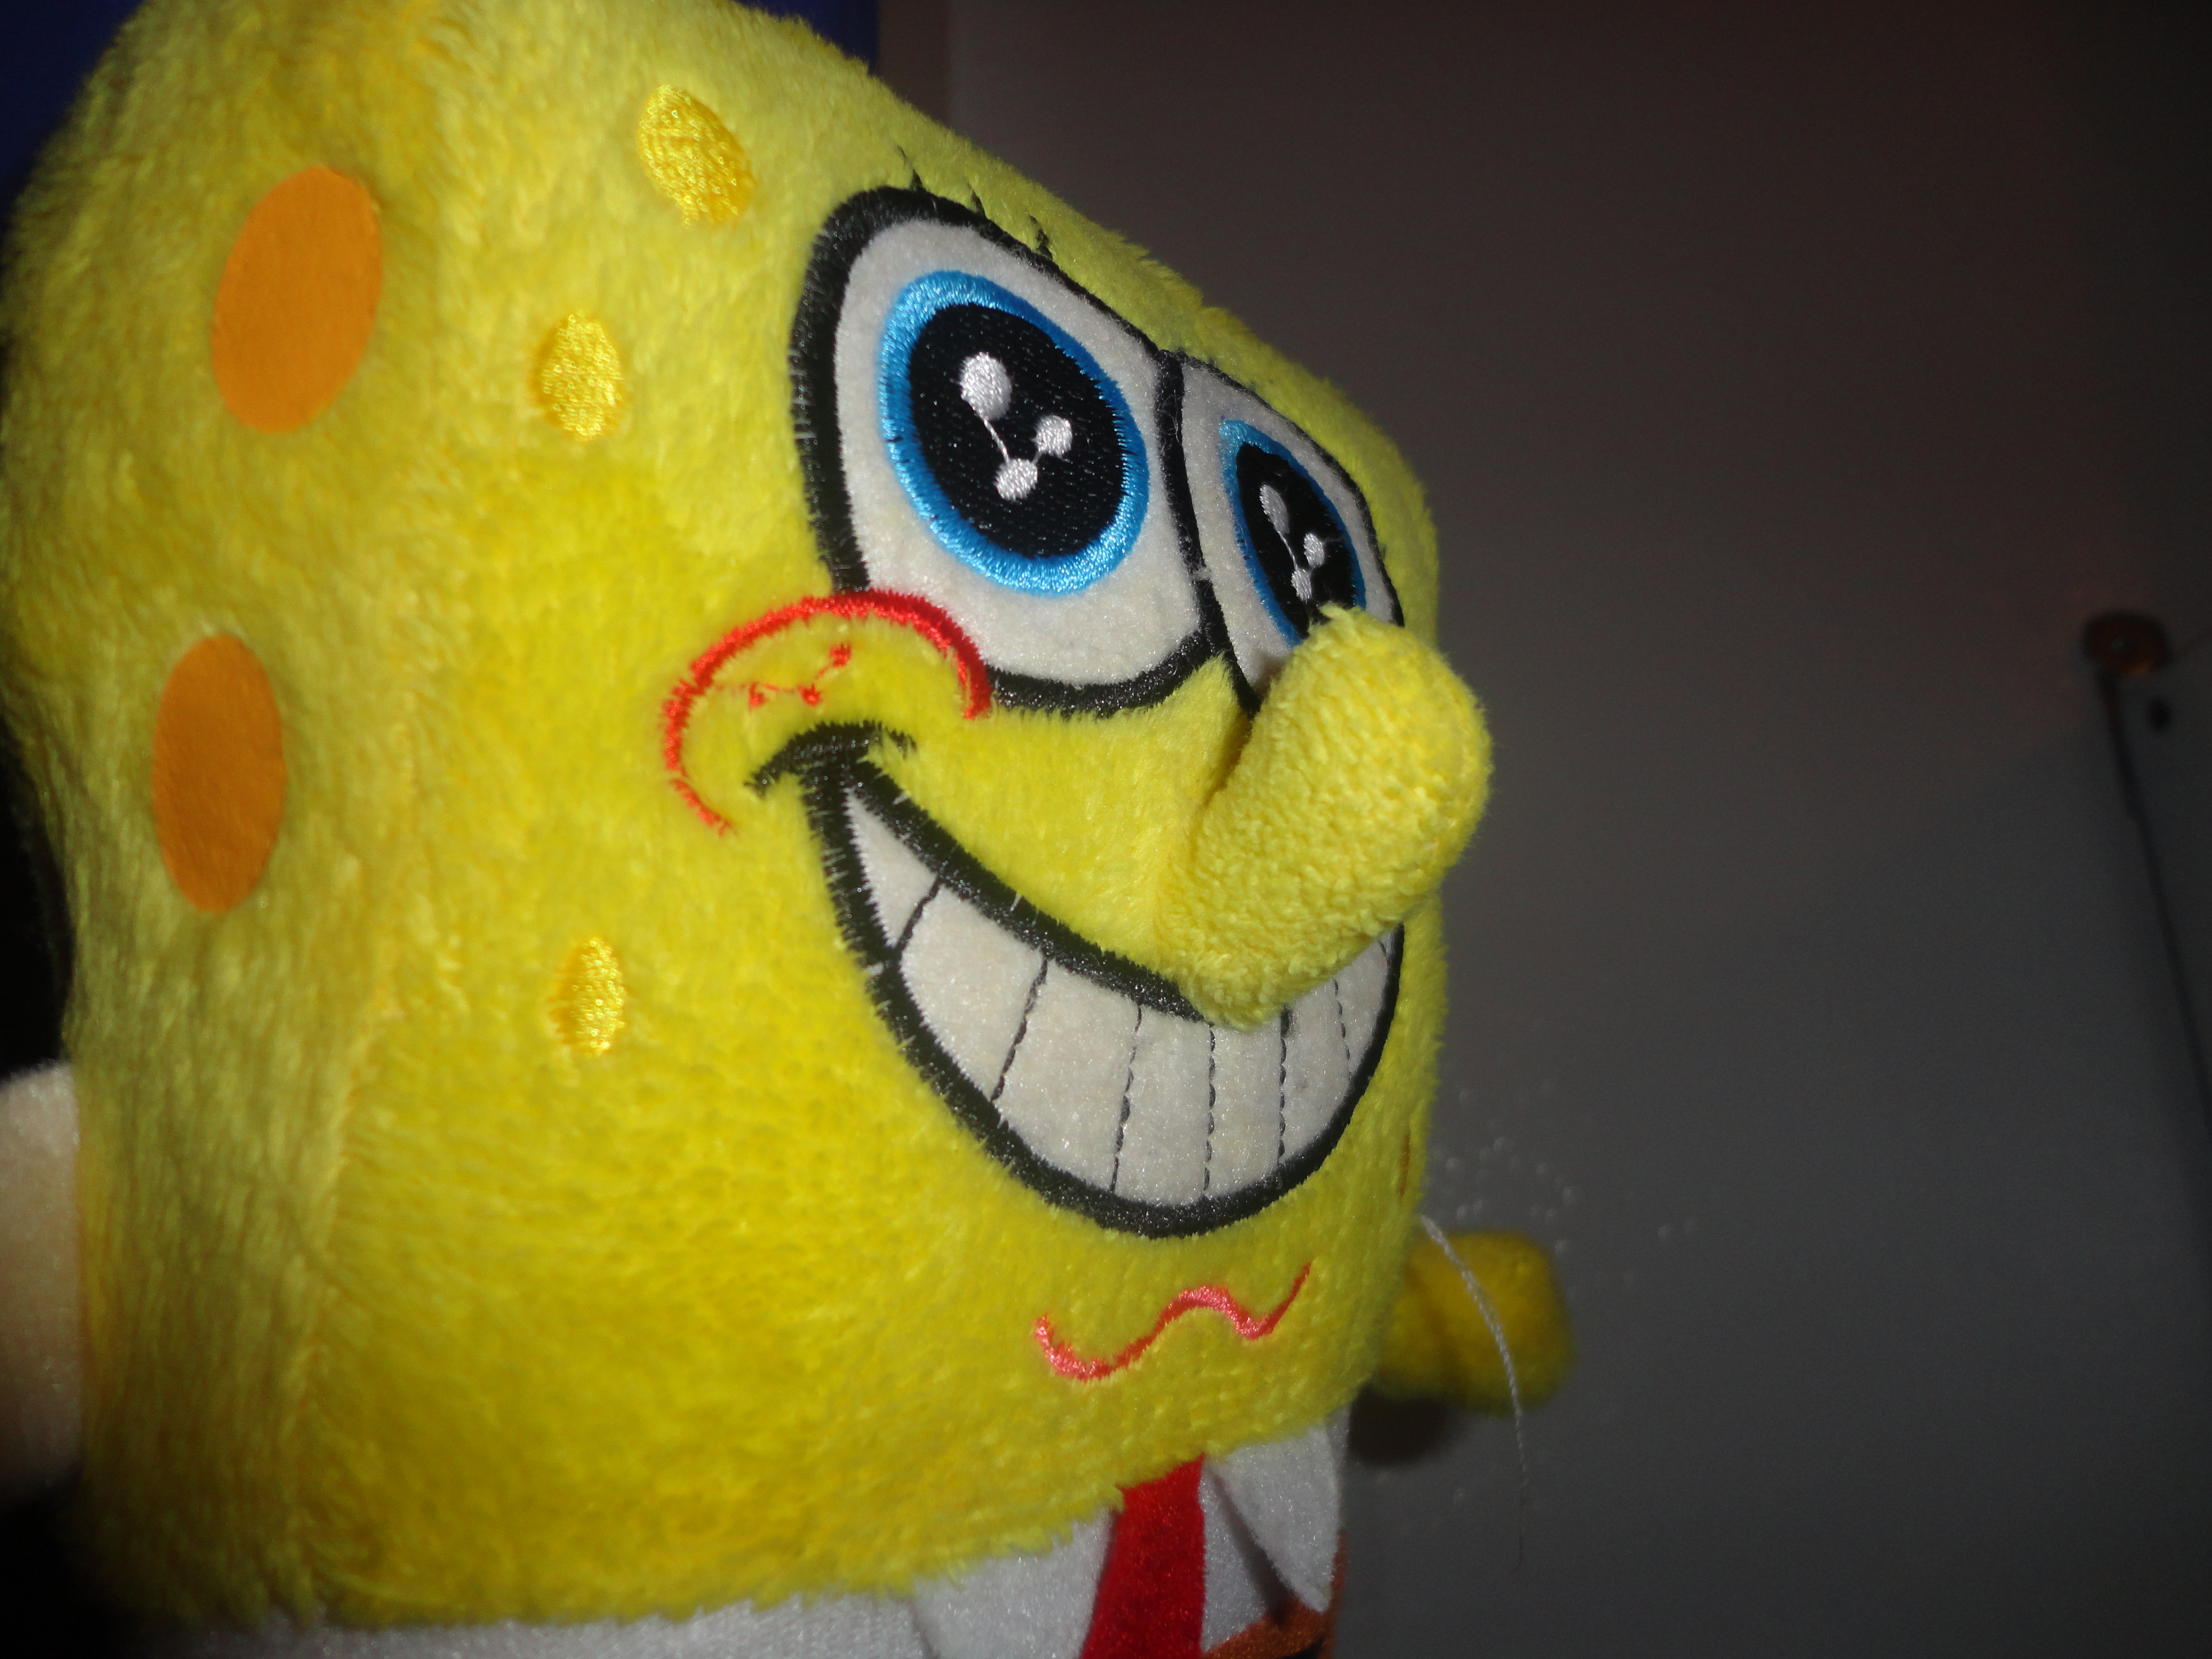 Sponge bob smile face photo